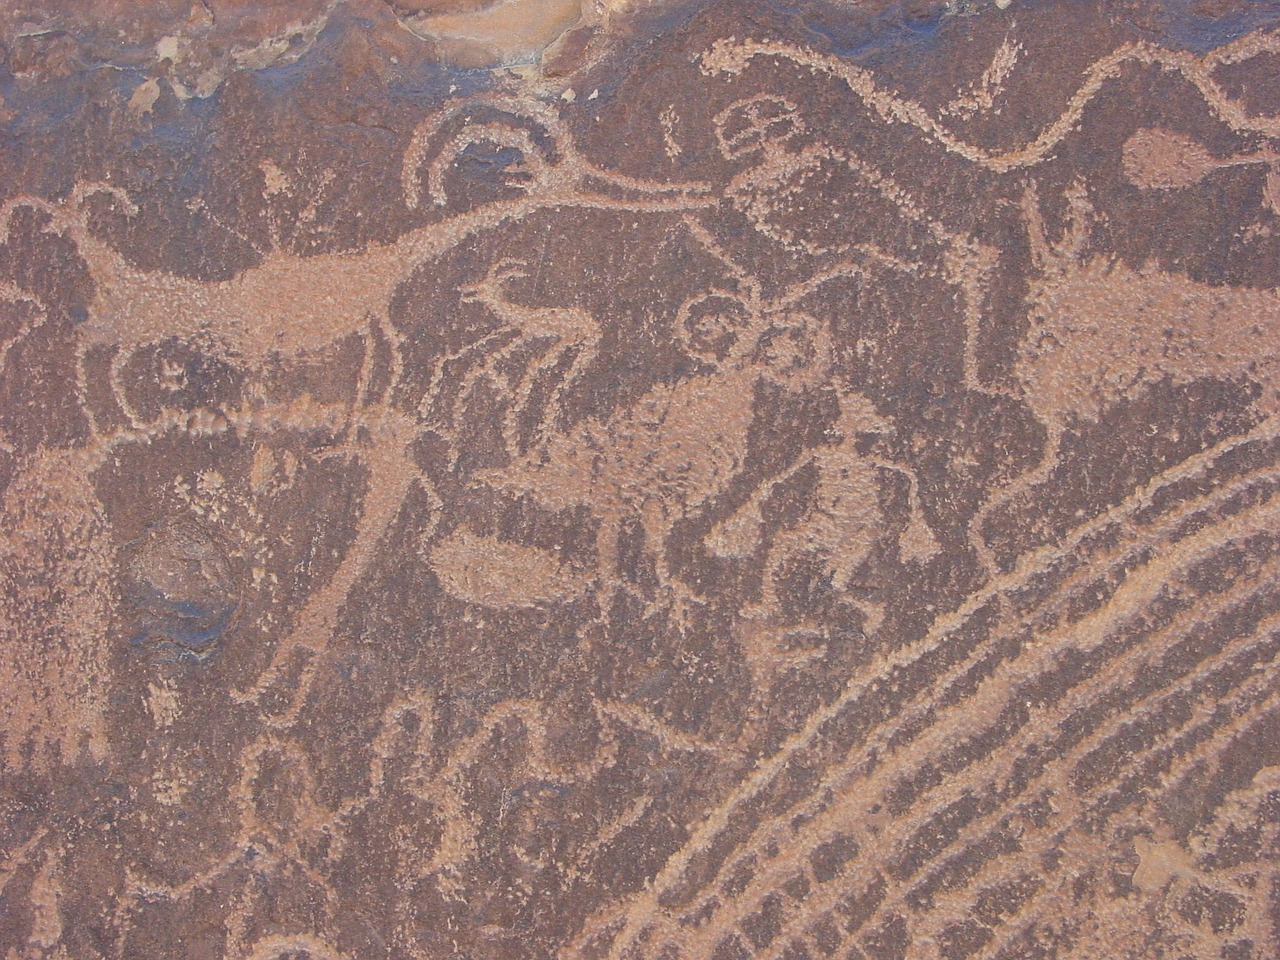 petroglyphs rock art utah free photo